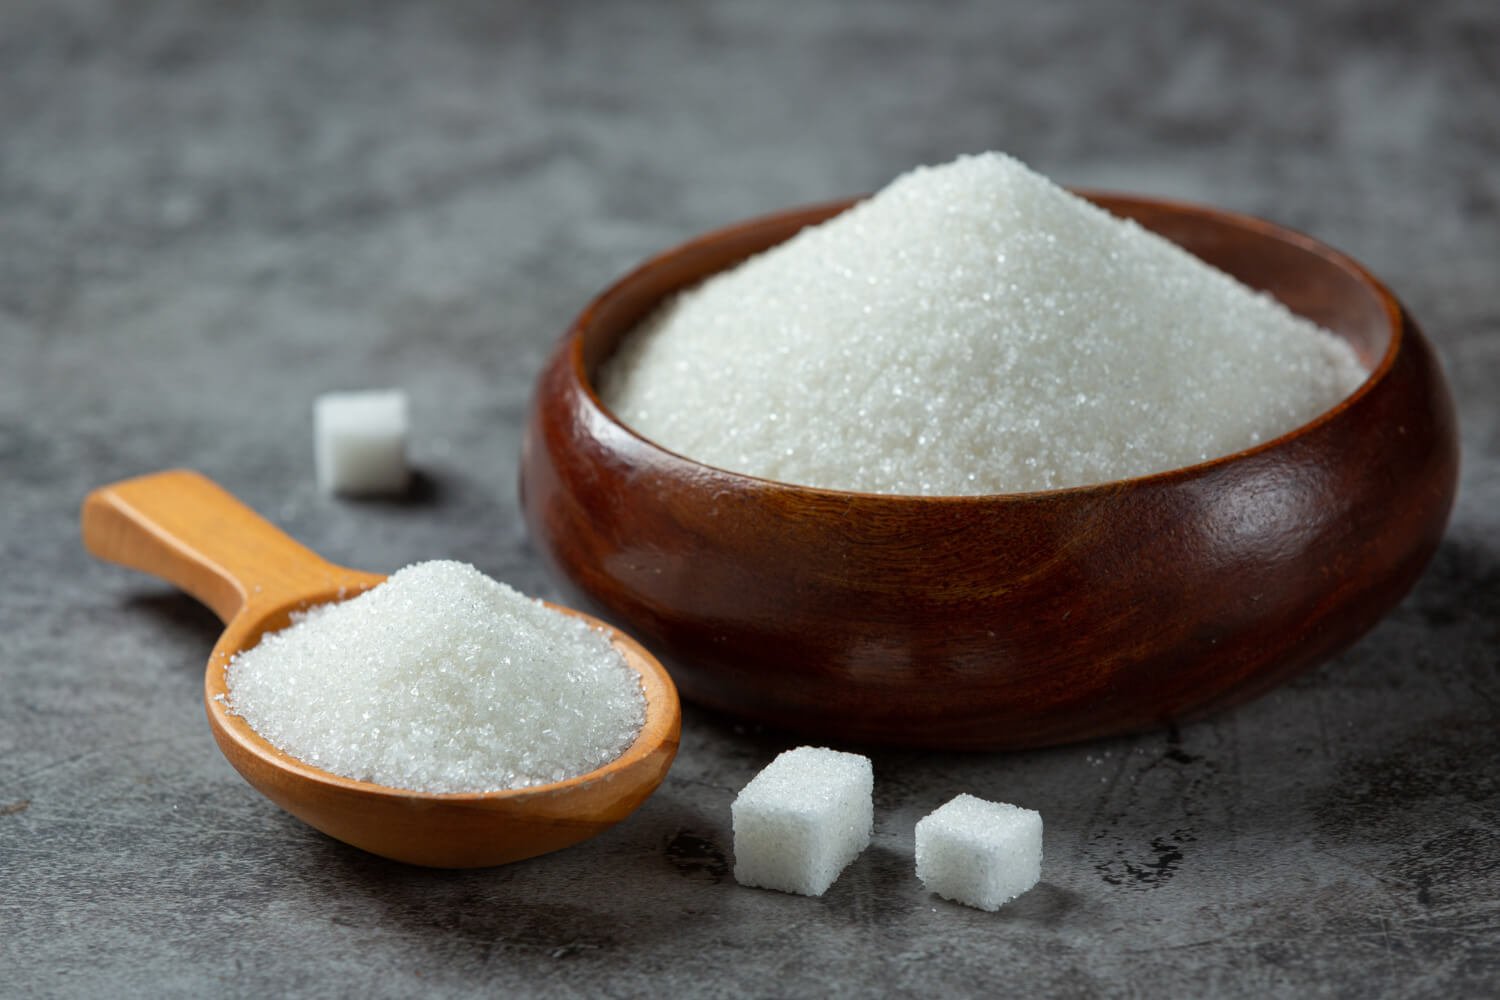 Excesso de açúcar: Entenda os riscos para a saúde bucal